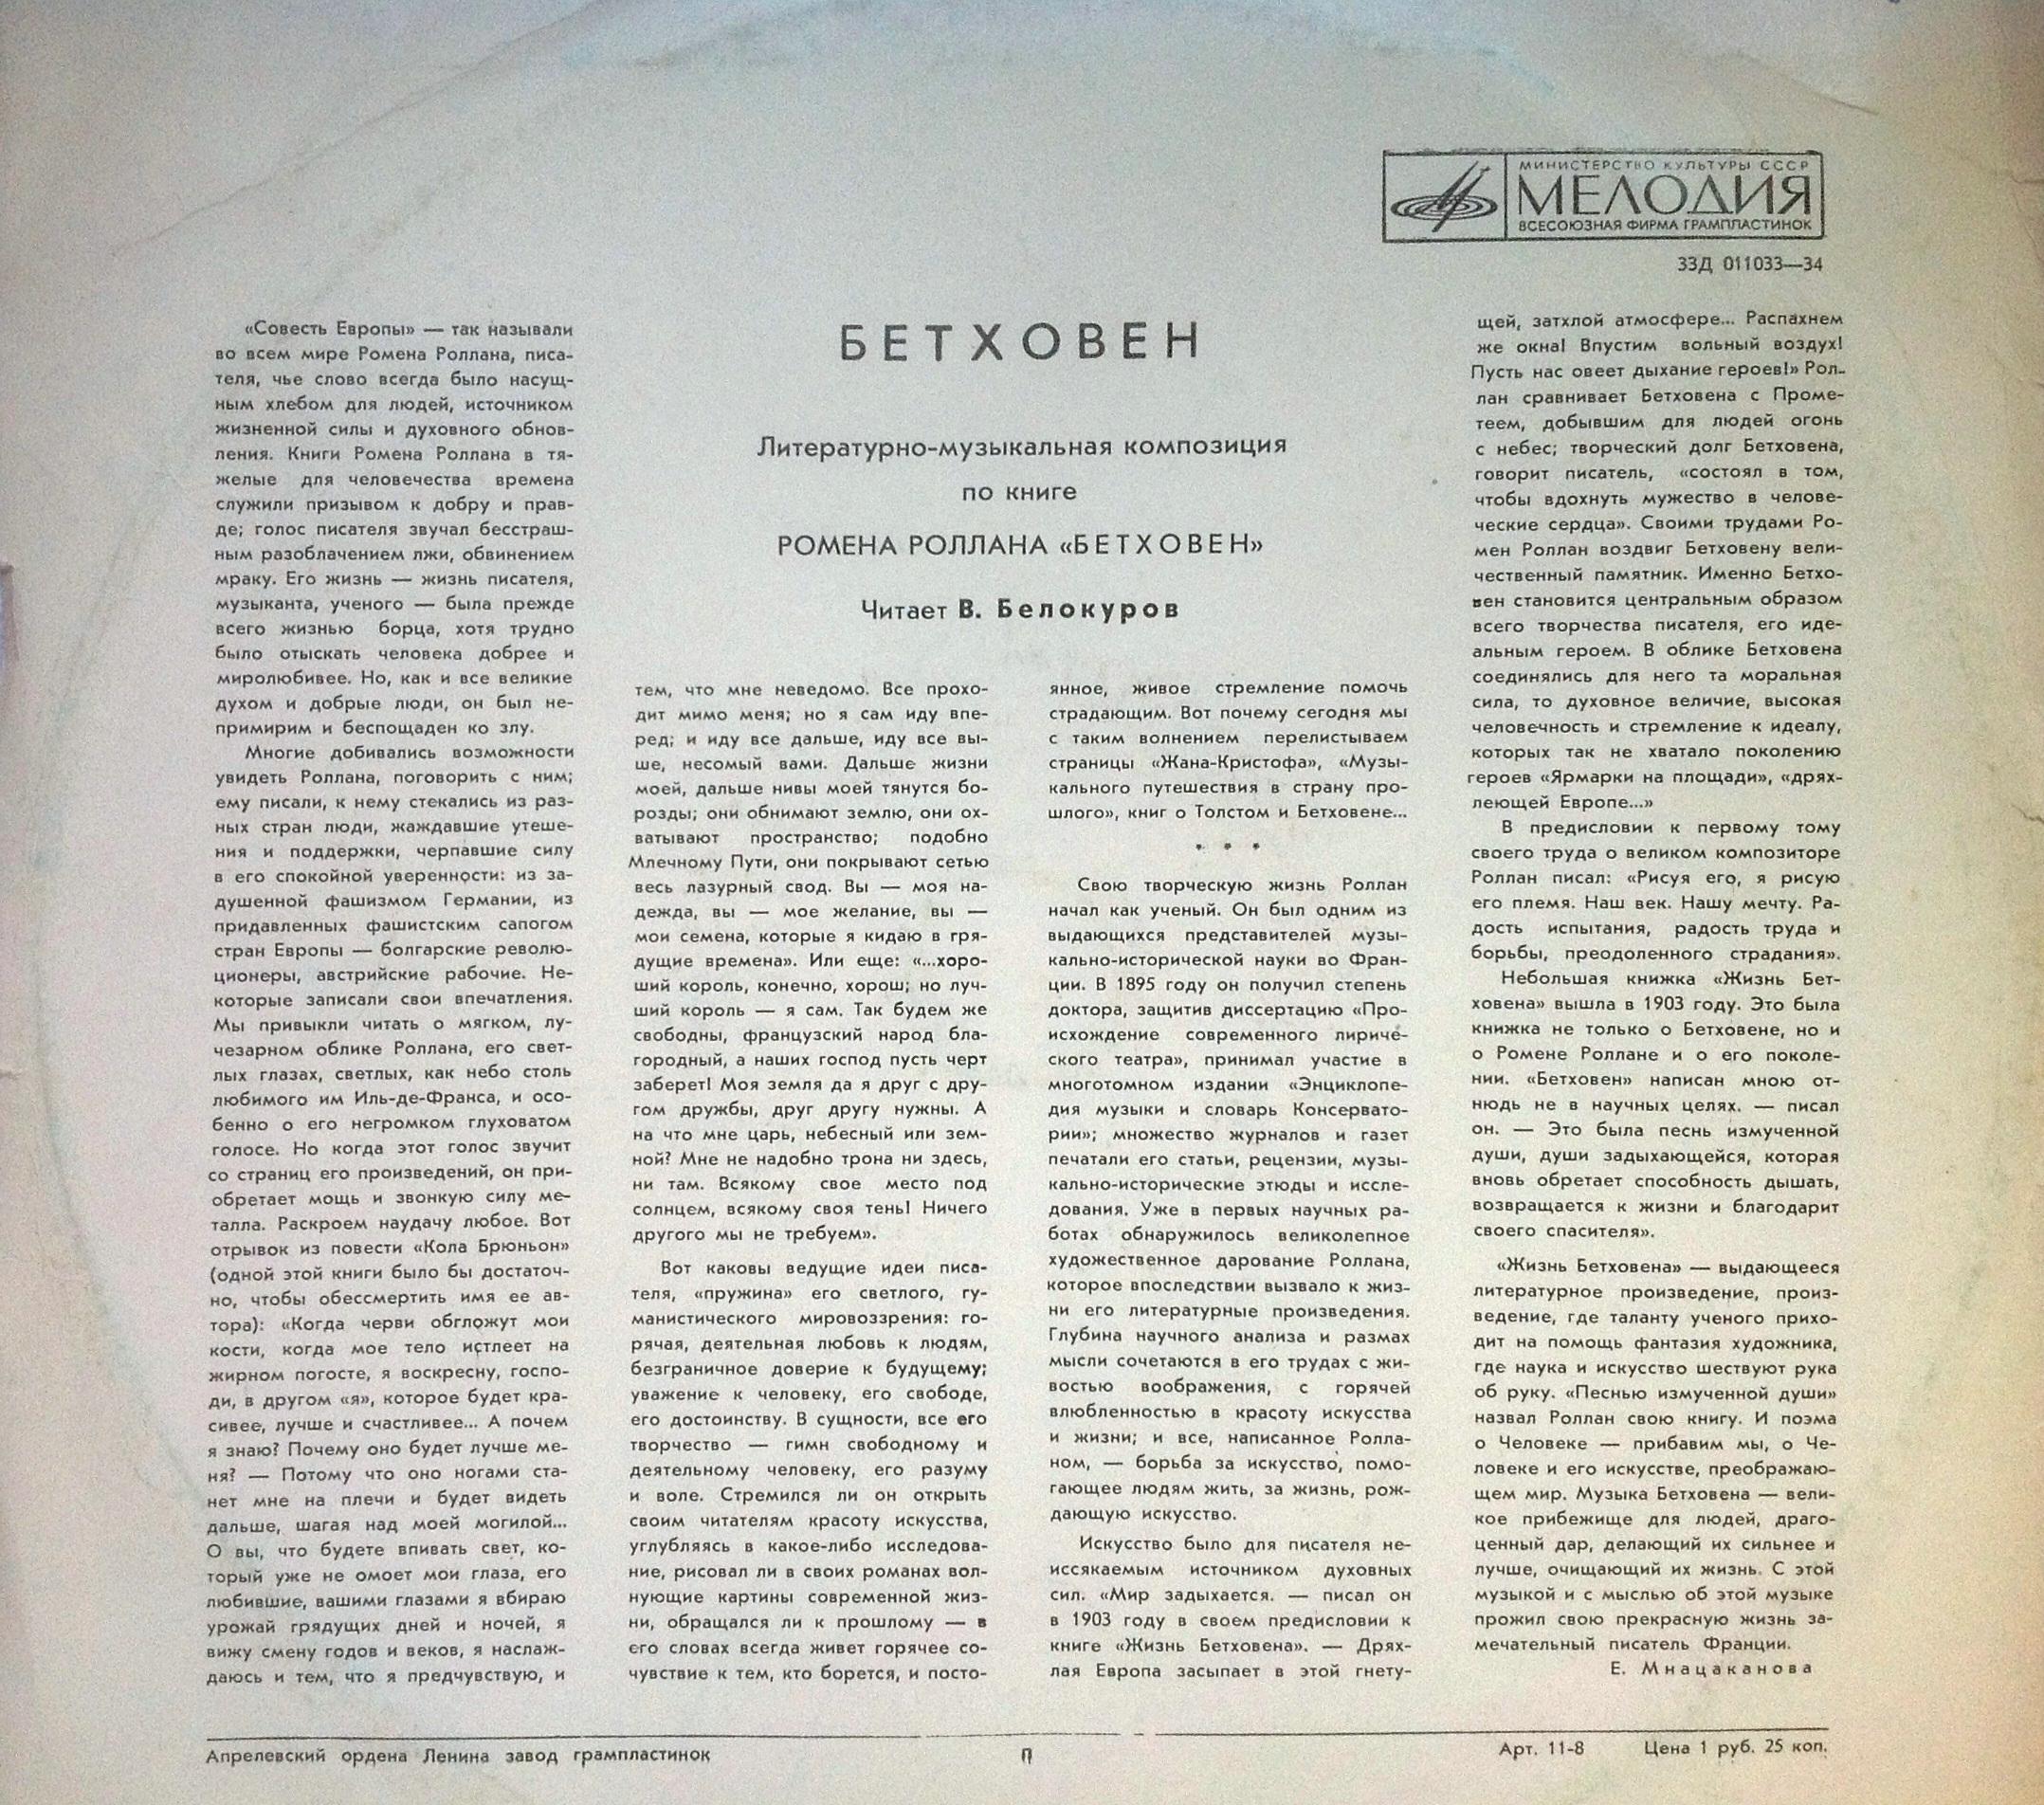 БЕТХОВЕН: Литературно-музыкальная композиция по книге Ромена Роллана "Бетховен"